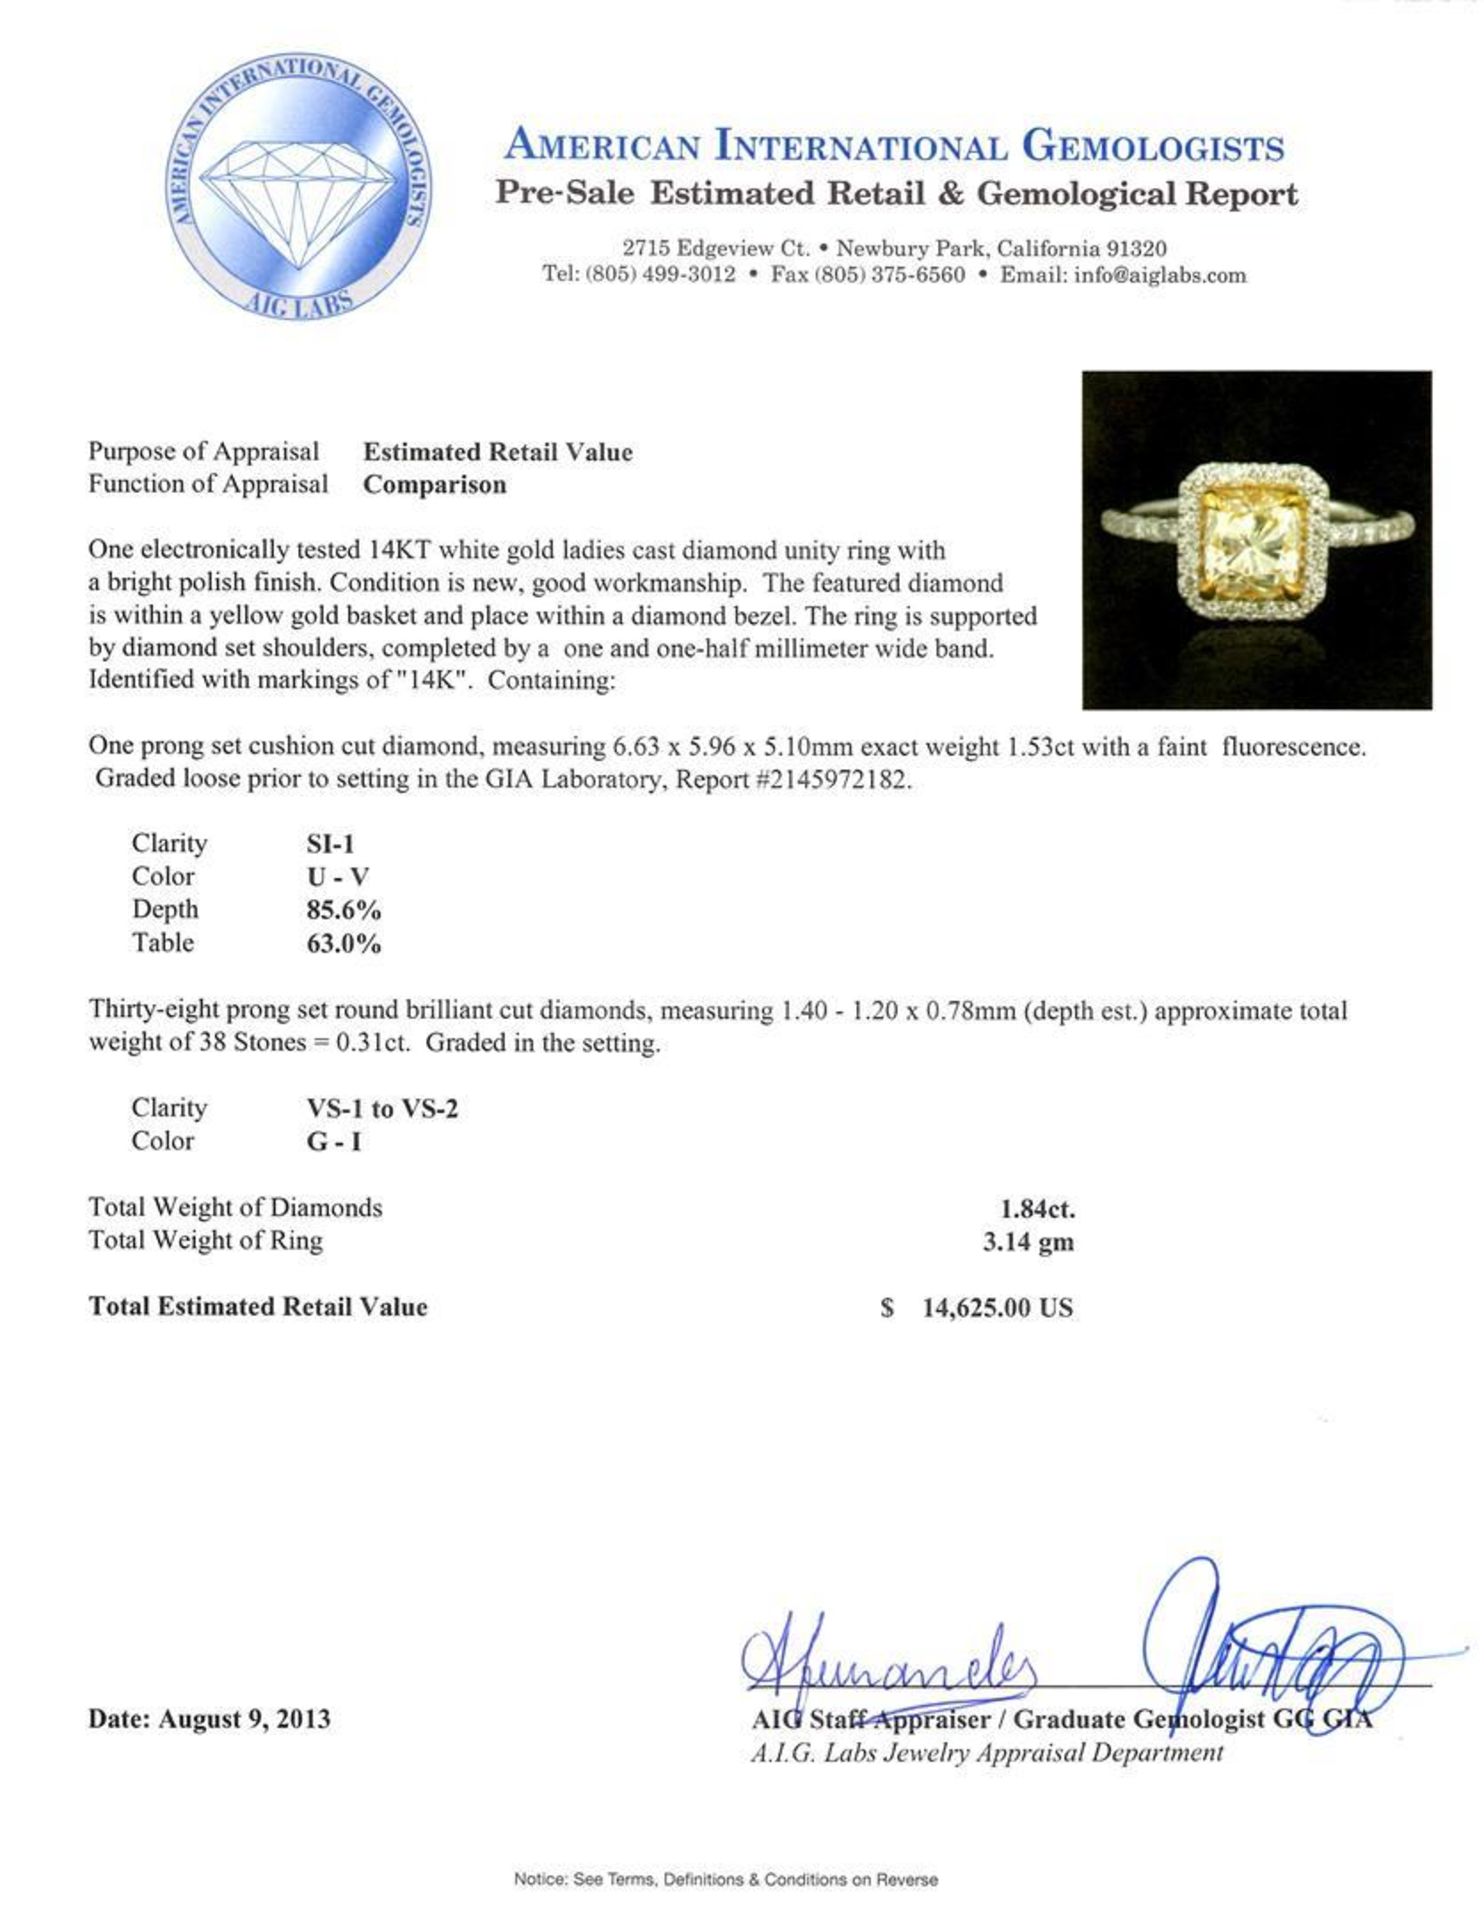 14KT White Gold 1.53ct SI-1/U-V Diamond Ring - Image 3 of 4